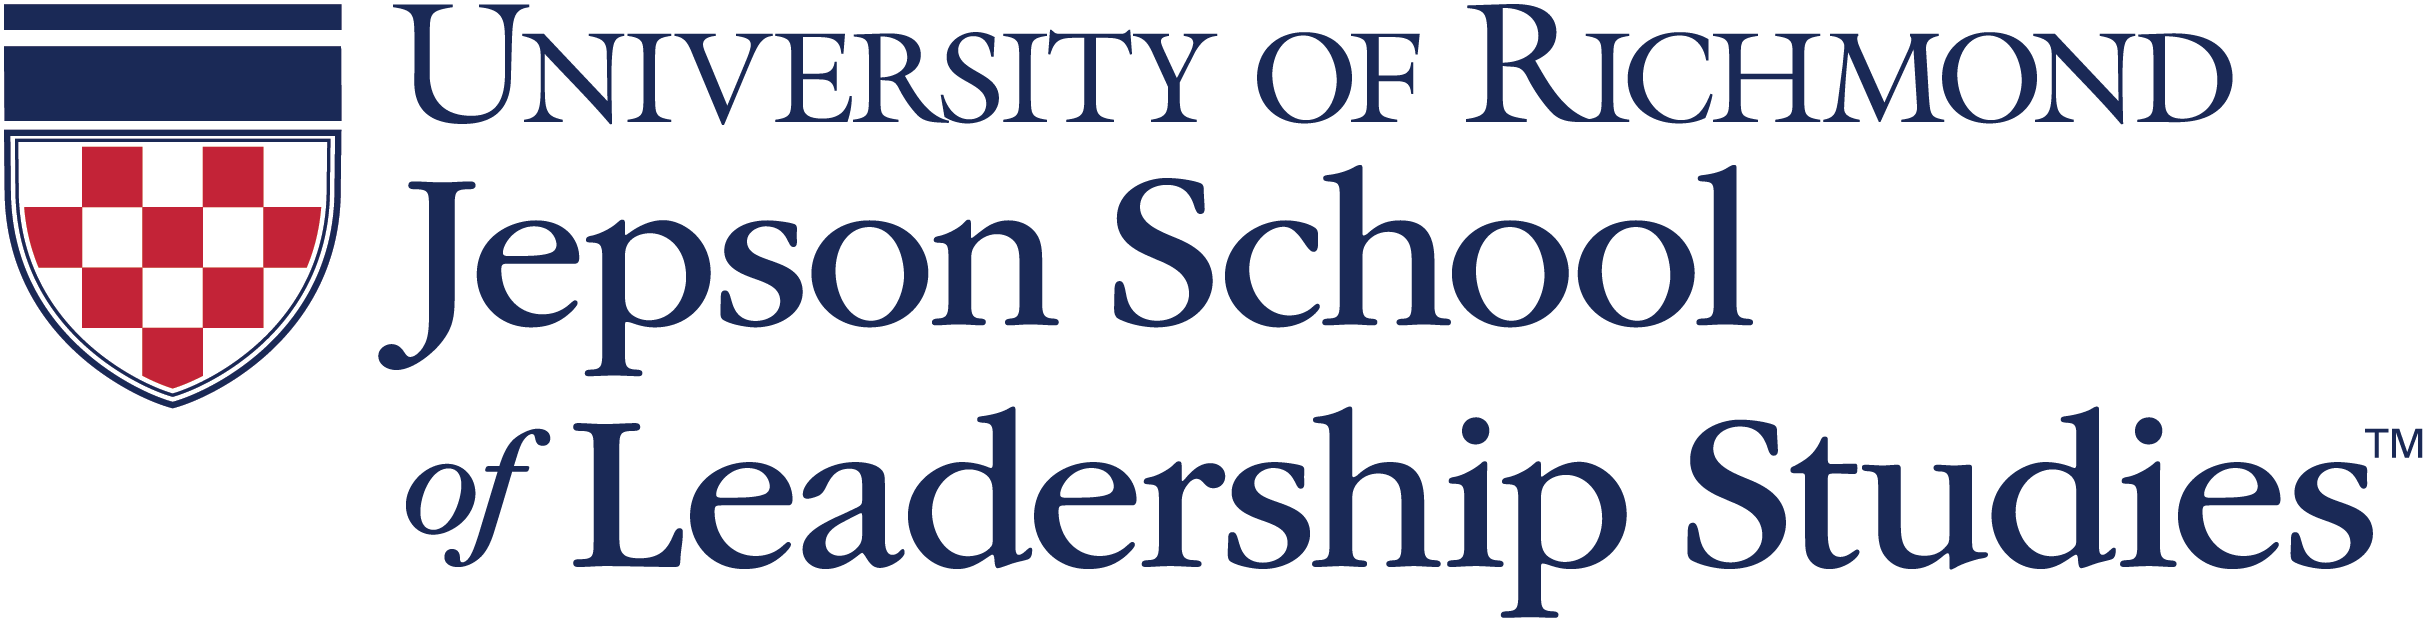 University of Richmond: Jepson School of Leadership Studies Logo